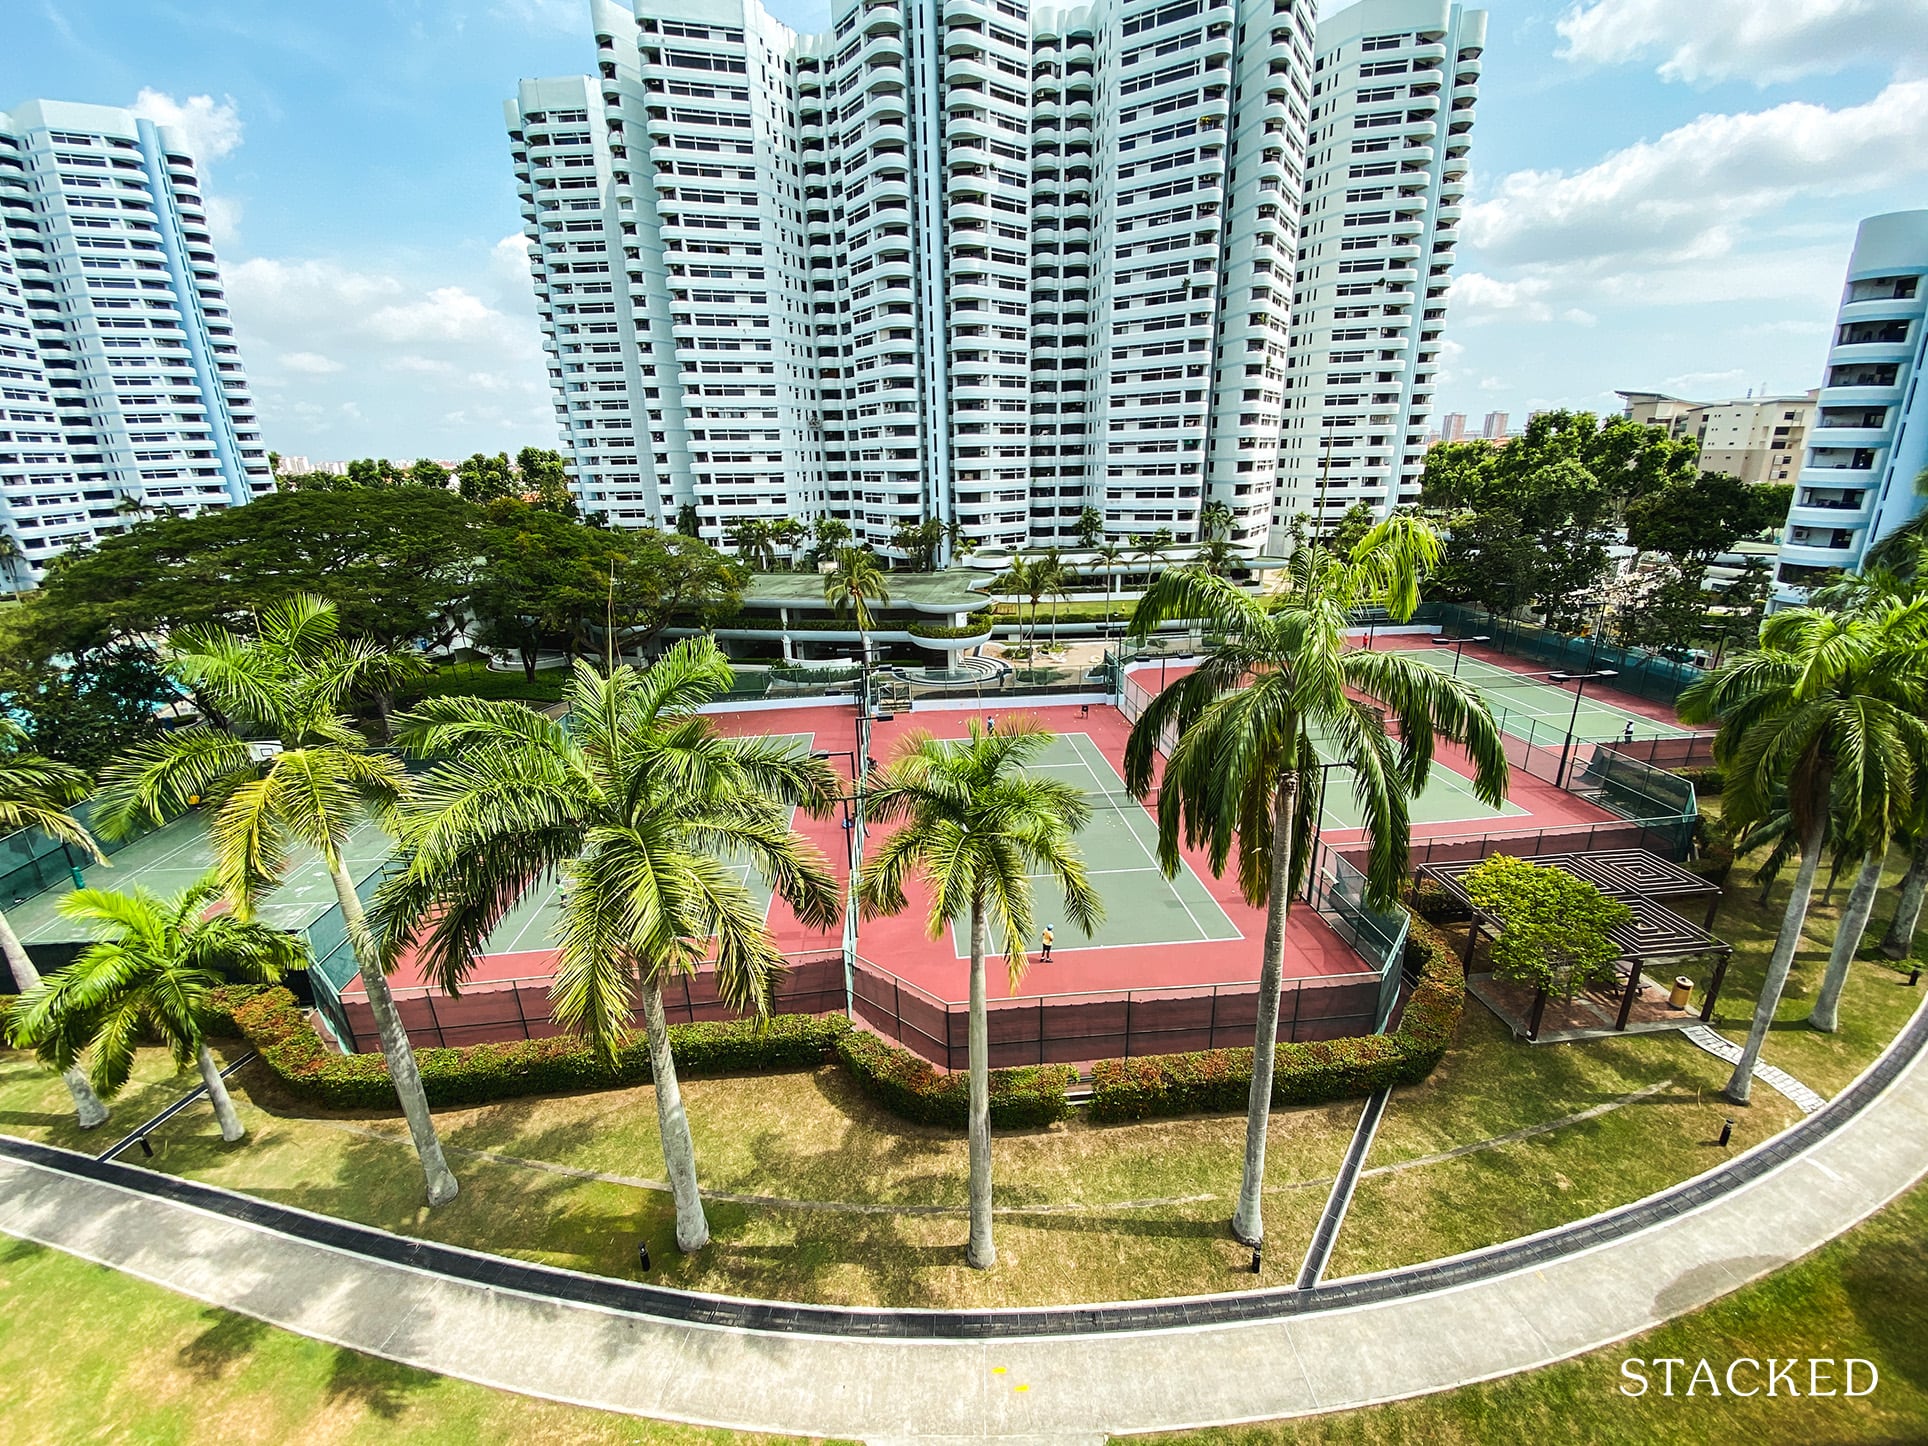 mandarin gardens tennis courts